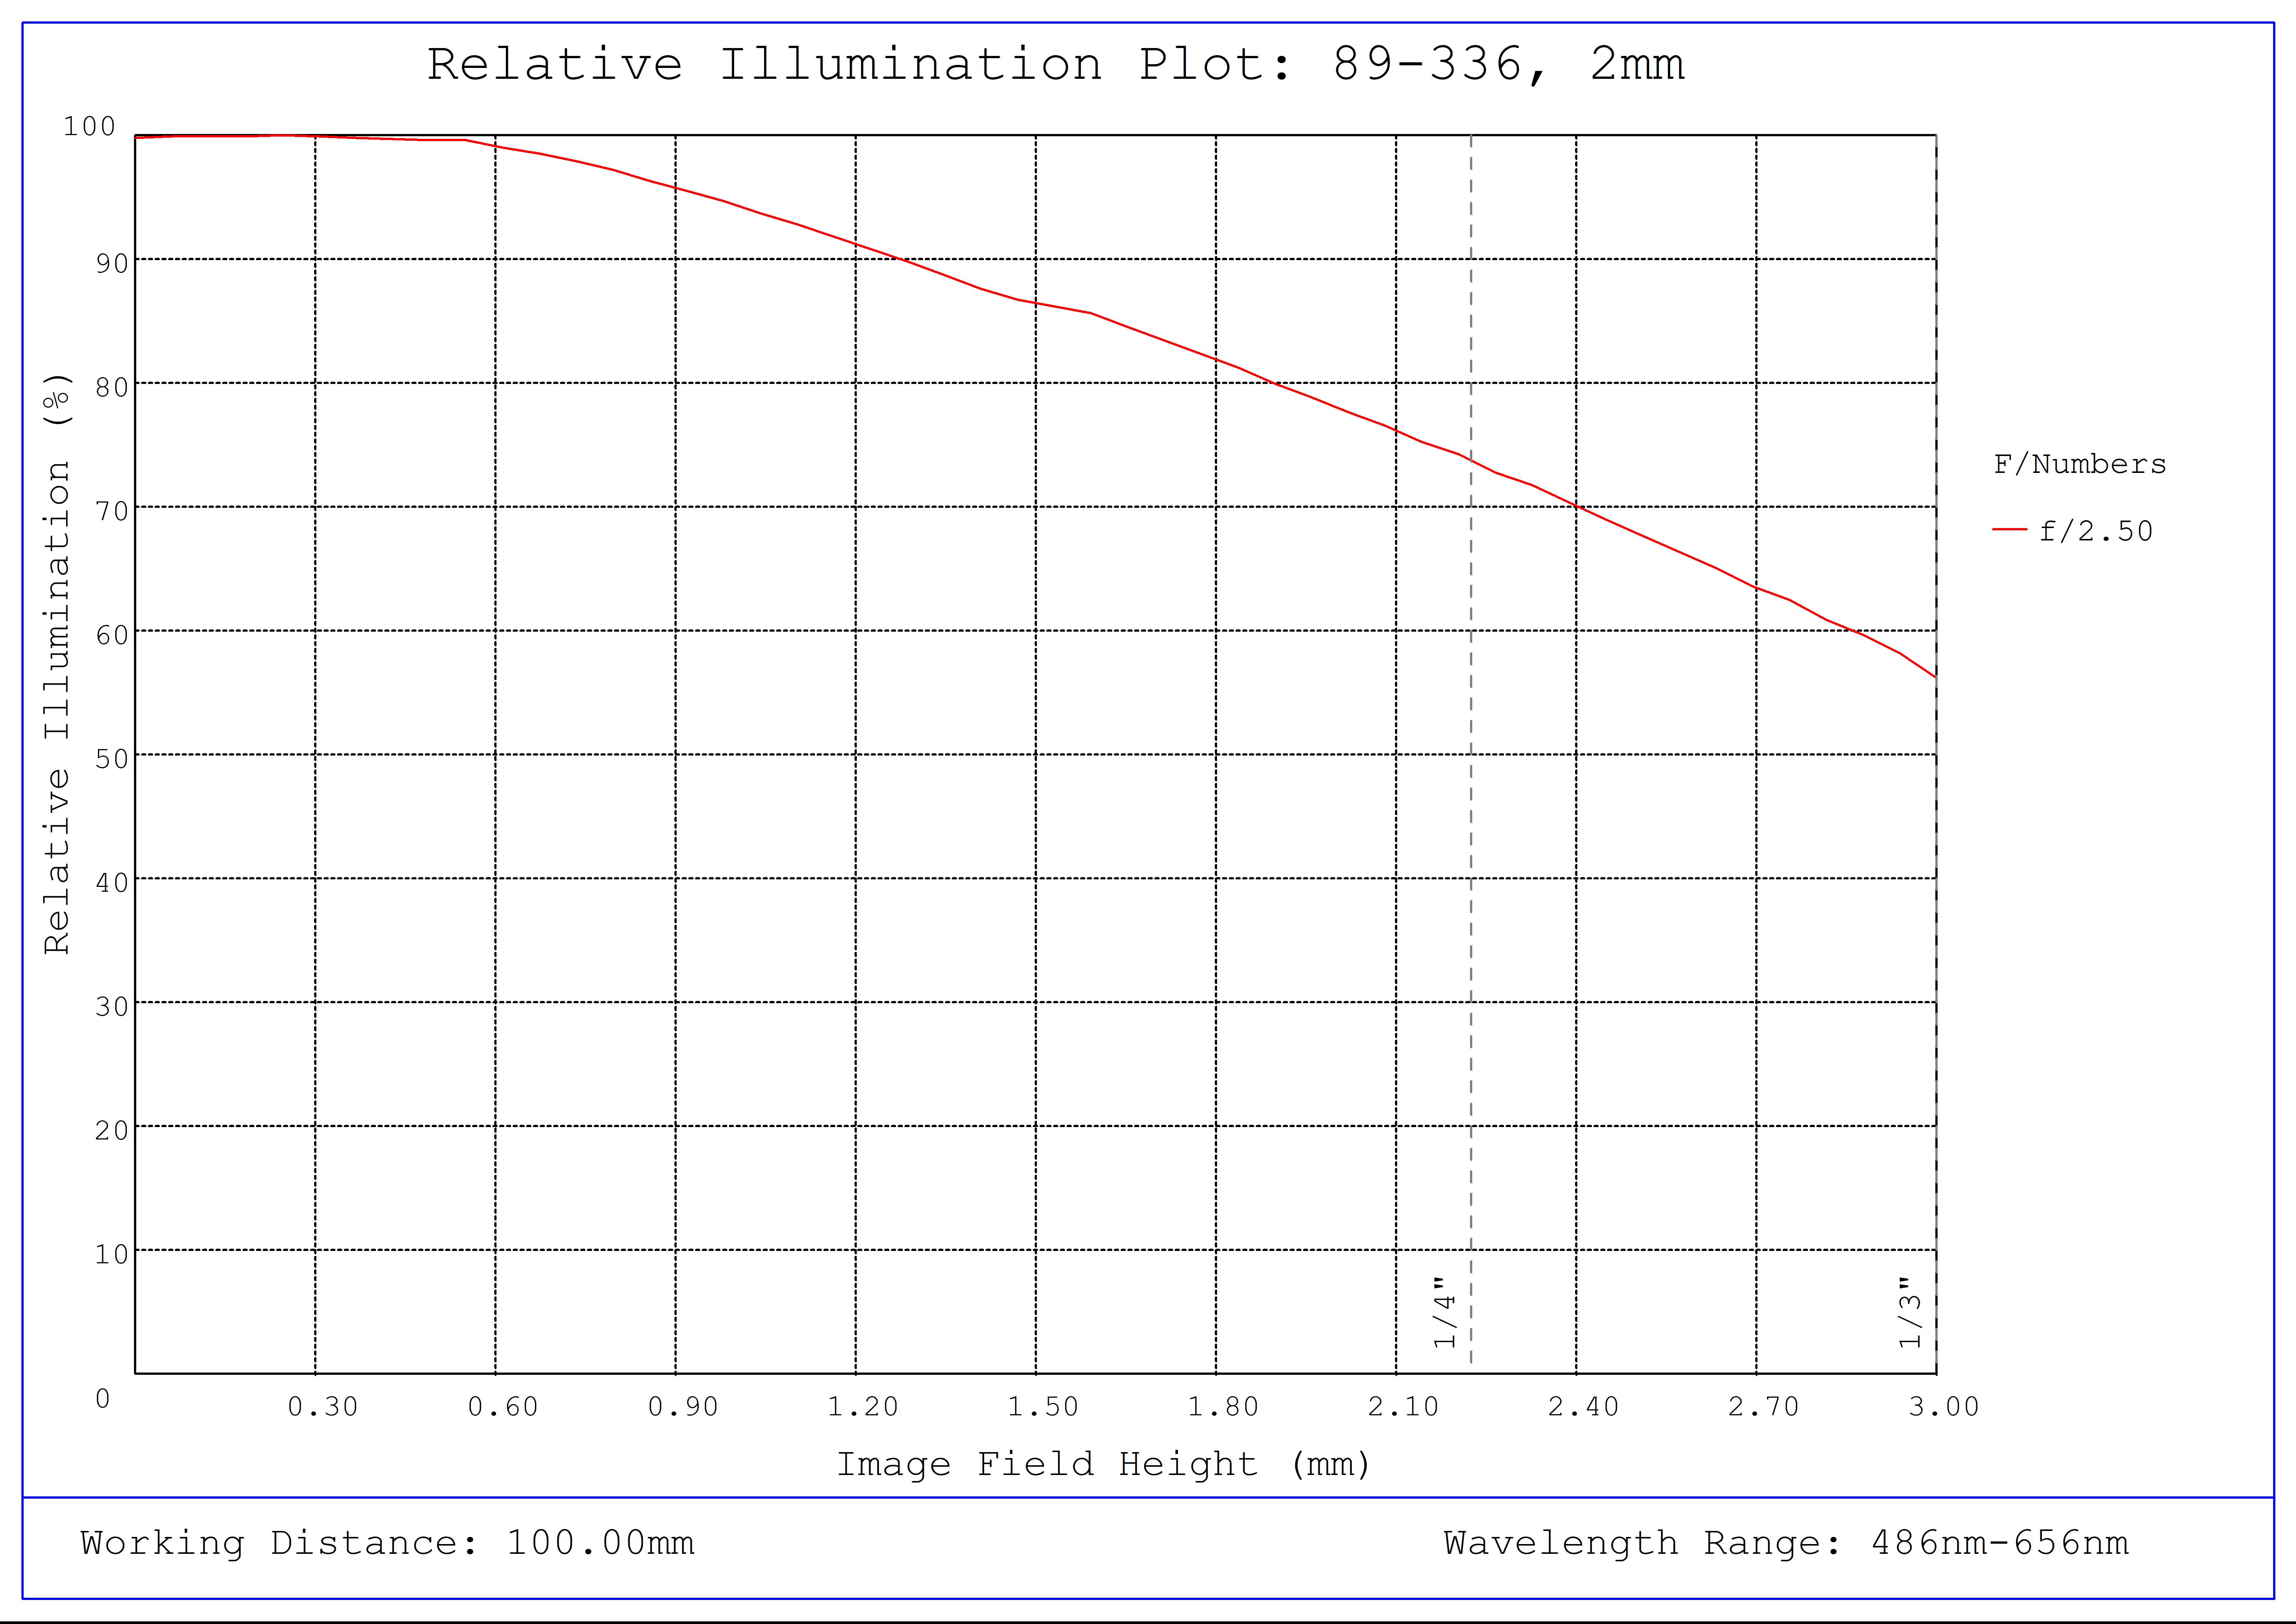 #89-336, 2mm FL f/2.5, Blue Series M12 Lens, Relative Illumination Plot